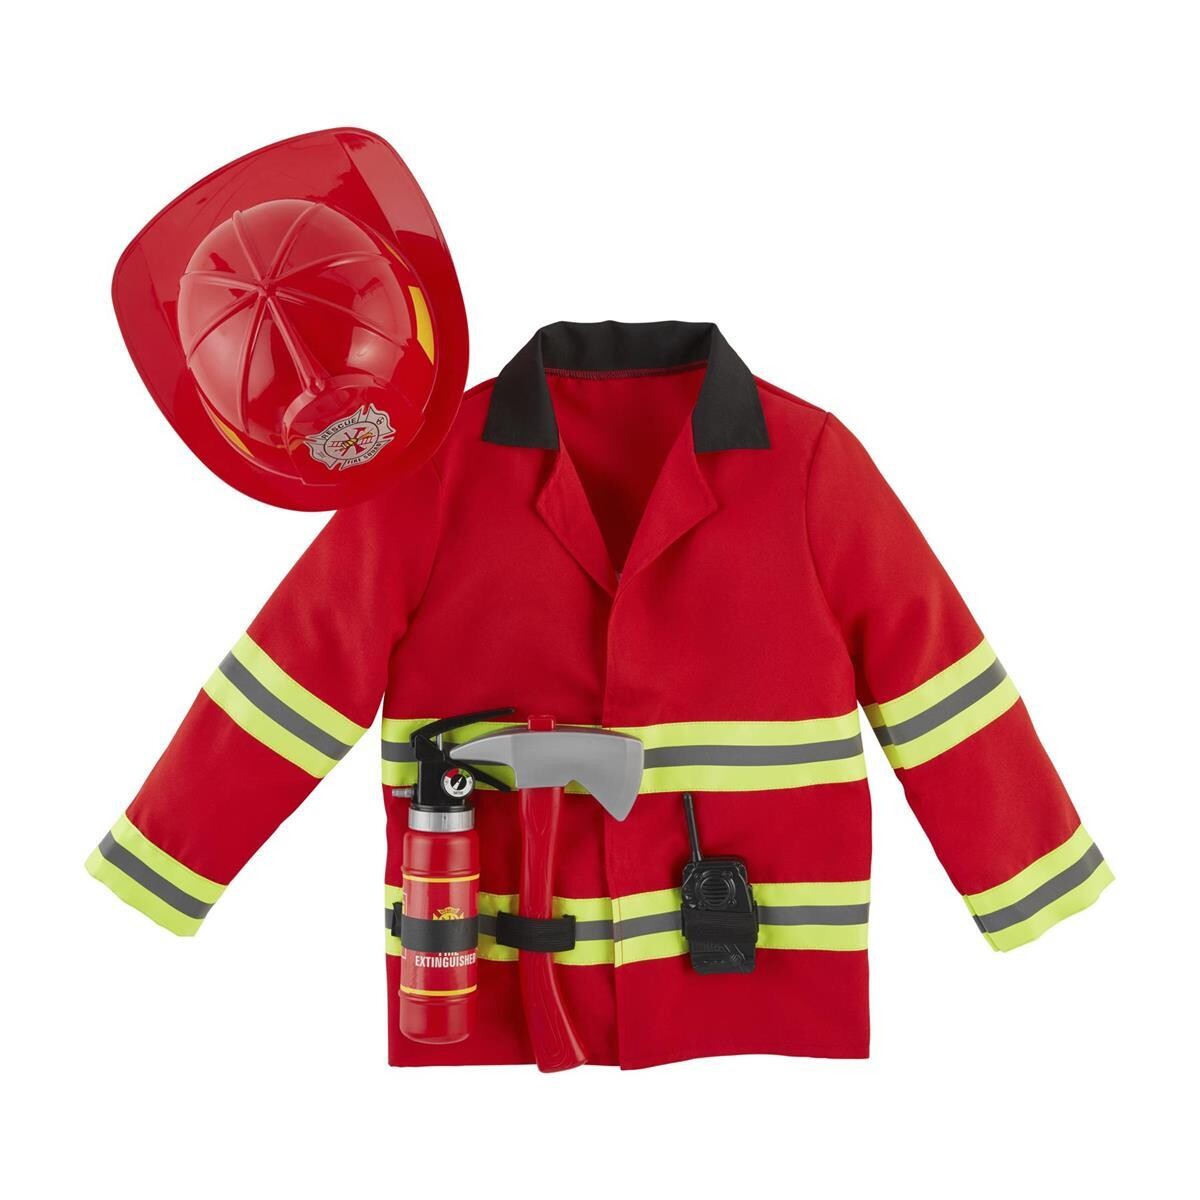 Firefighter Dress Up Kit 